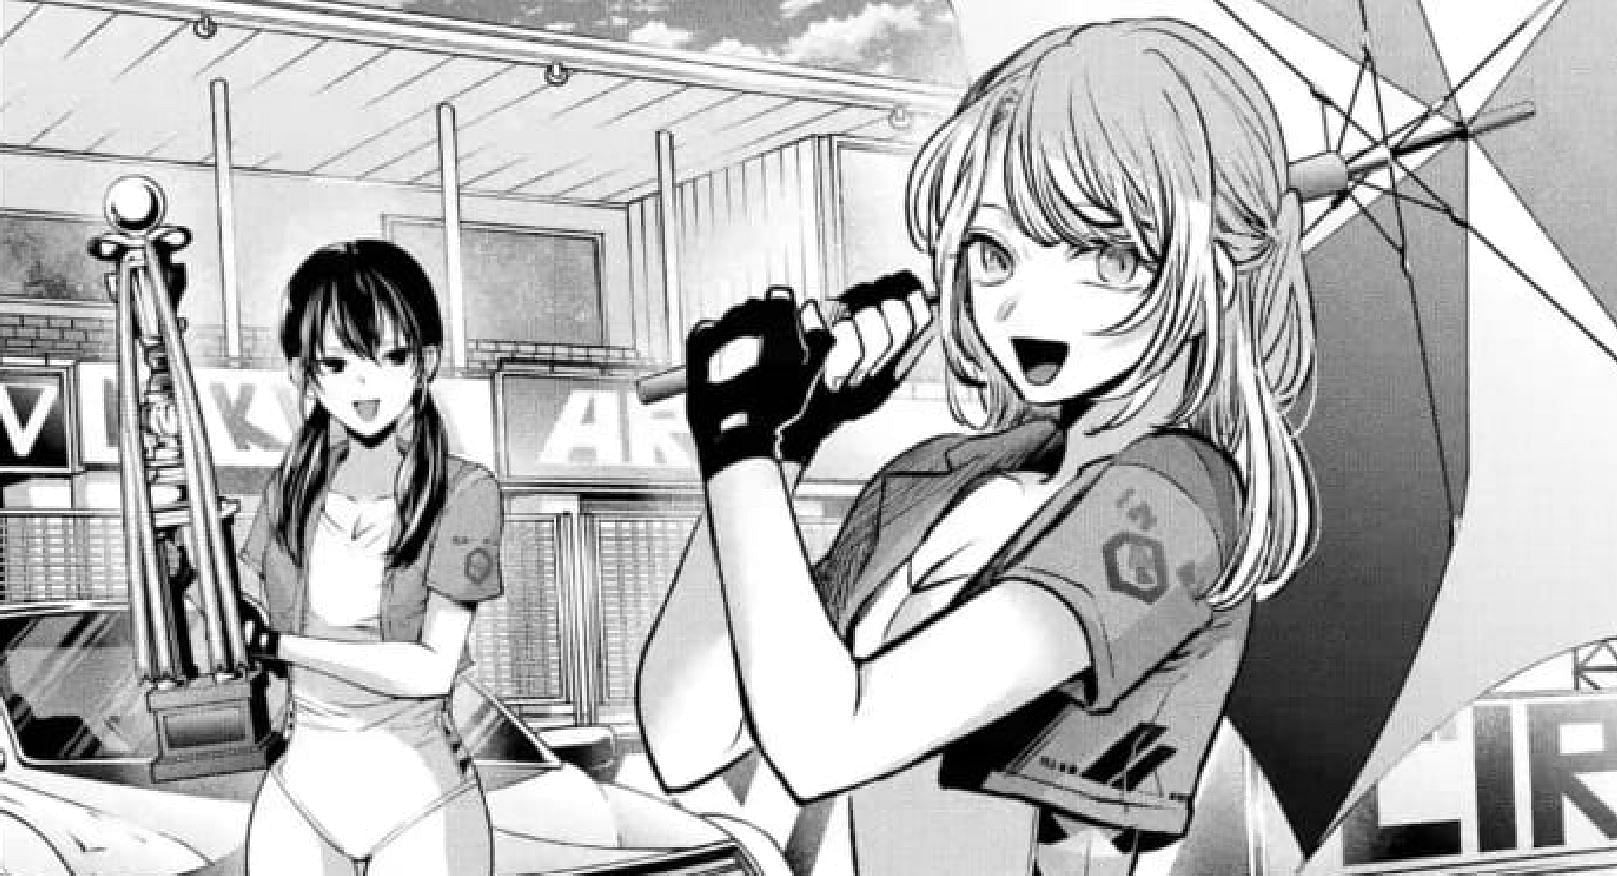 Oshi no Ko Volume 1 Manga Review (Spoiler-Free)